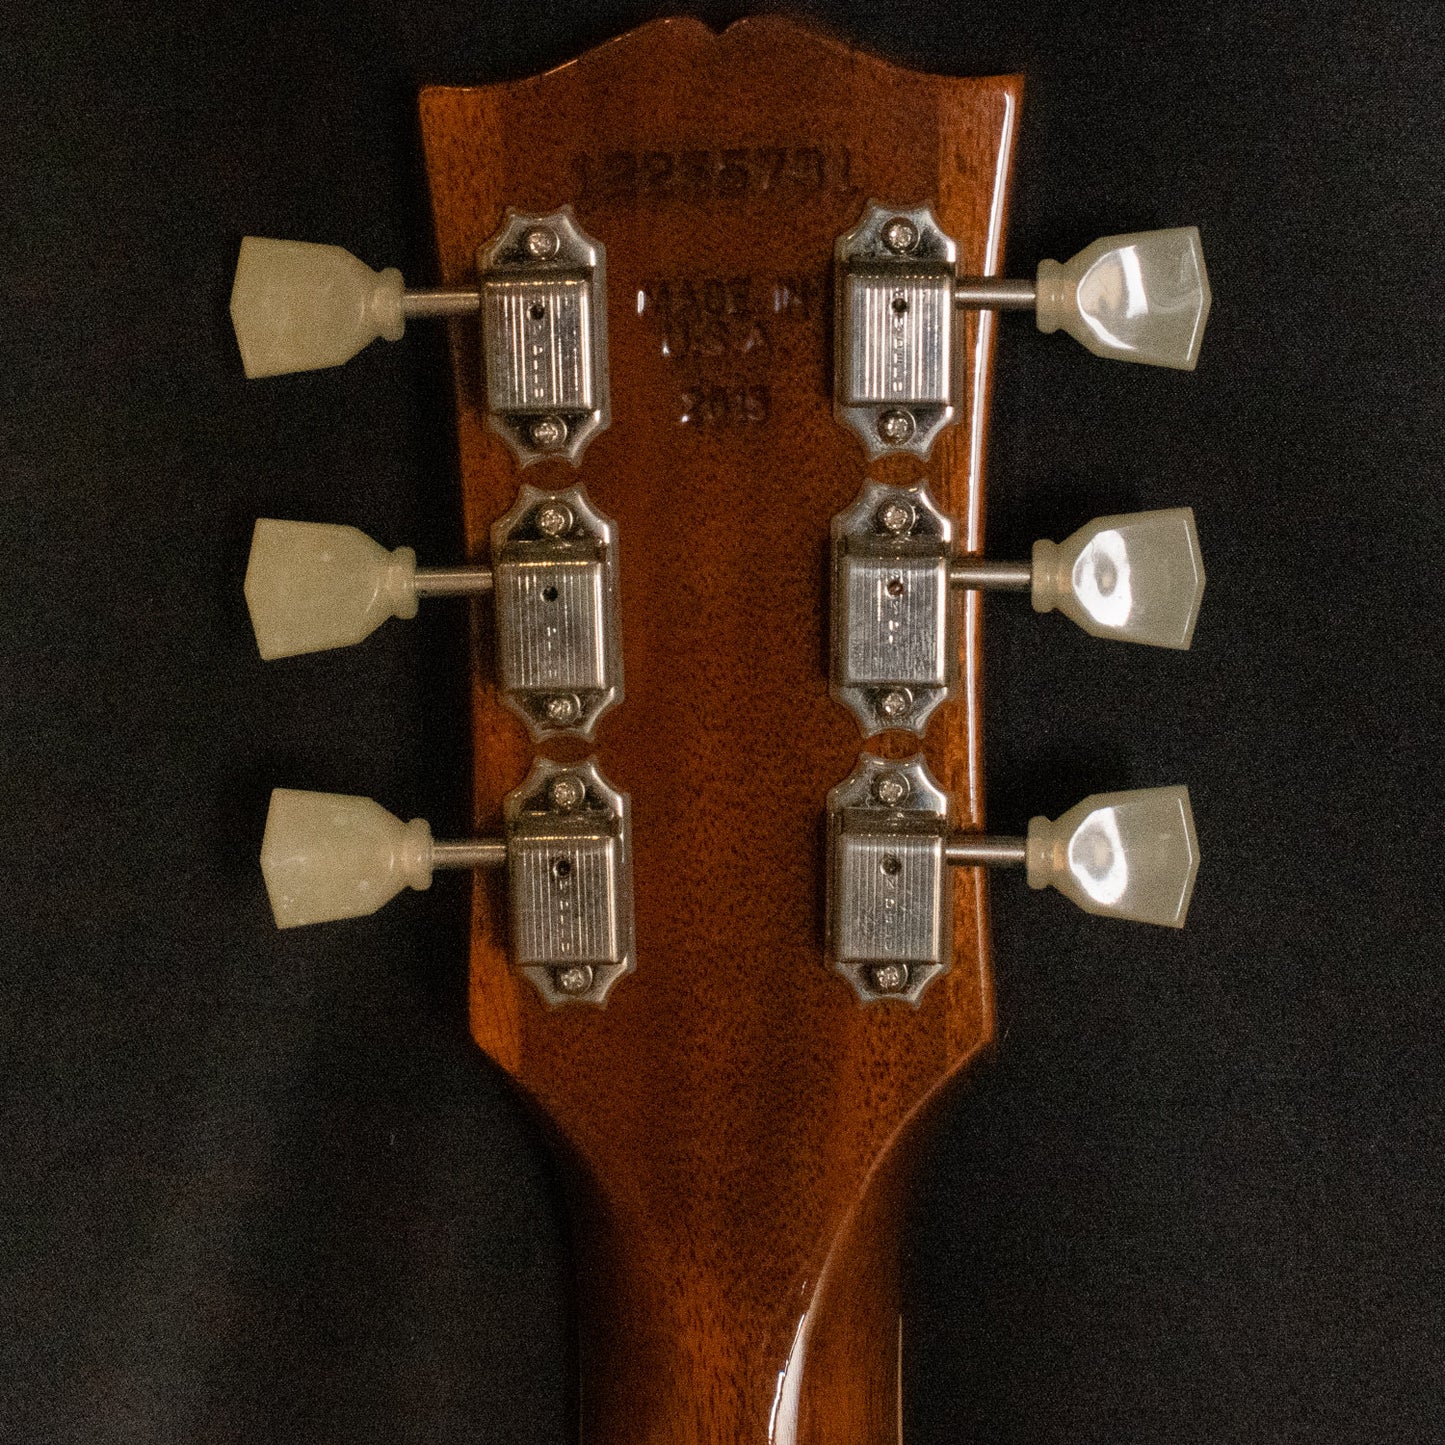 2015 Gibson ES Les Paul Standard